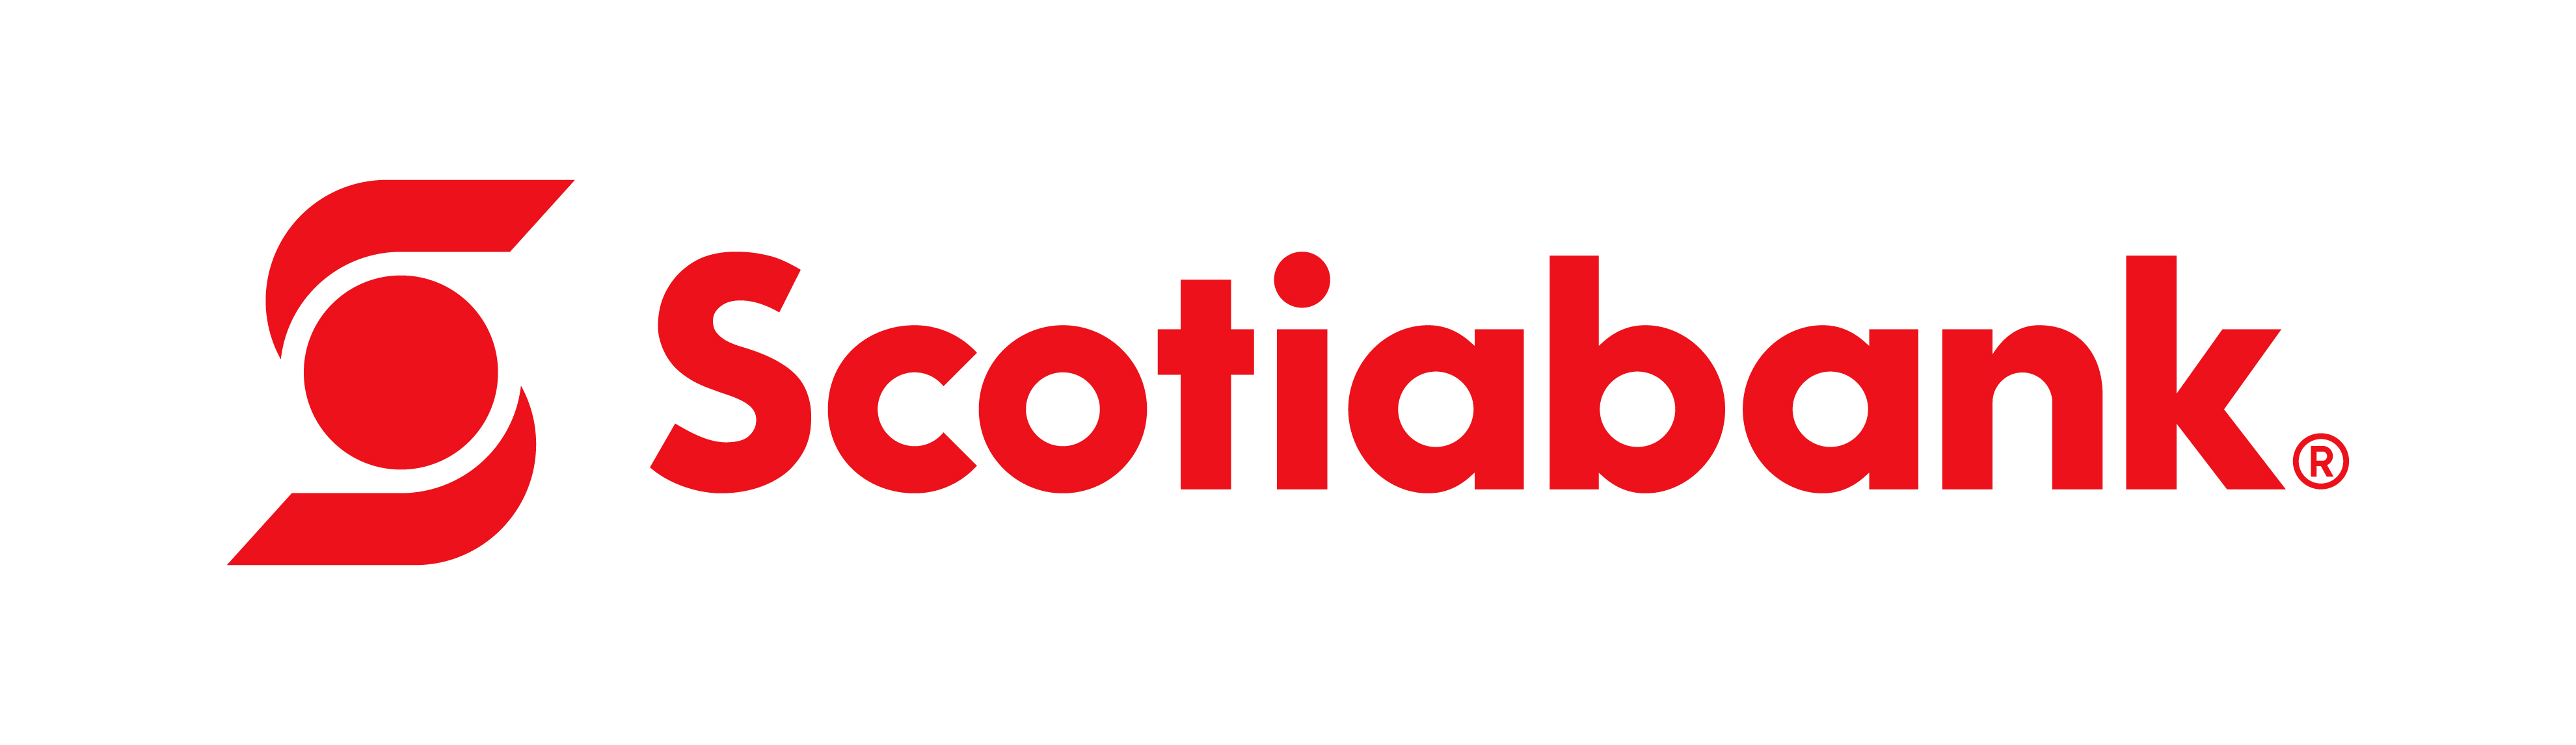 Scotiabank_Corporate_Logo_HEX_E